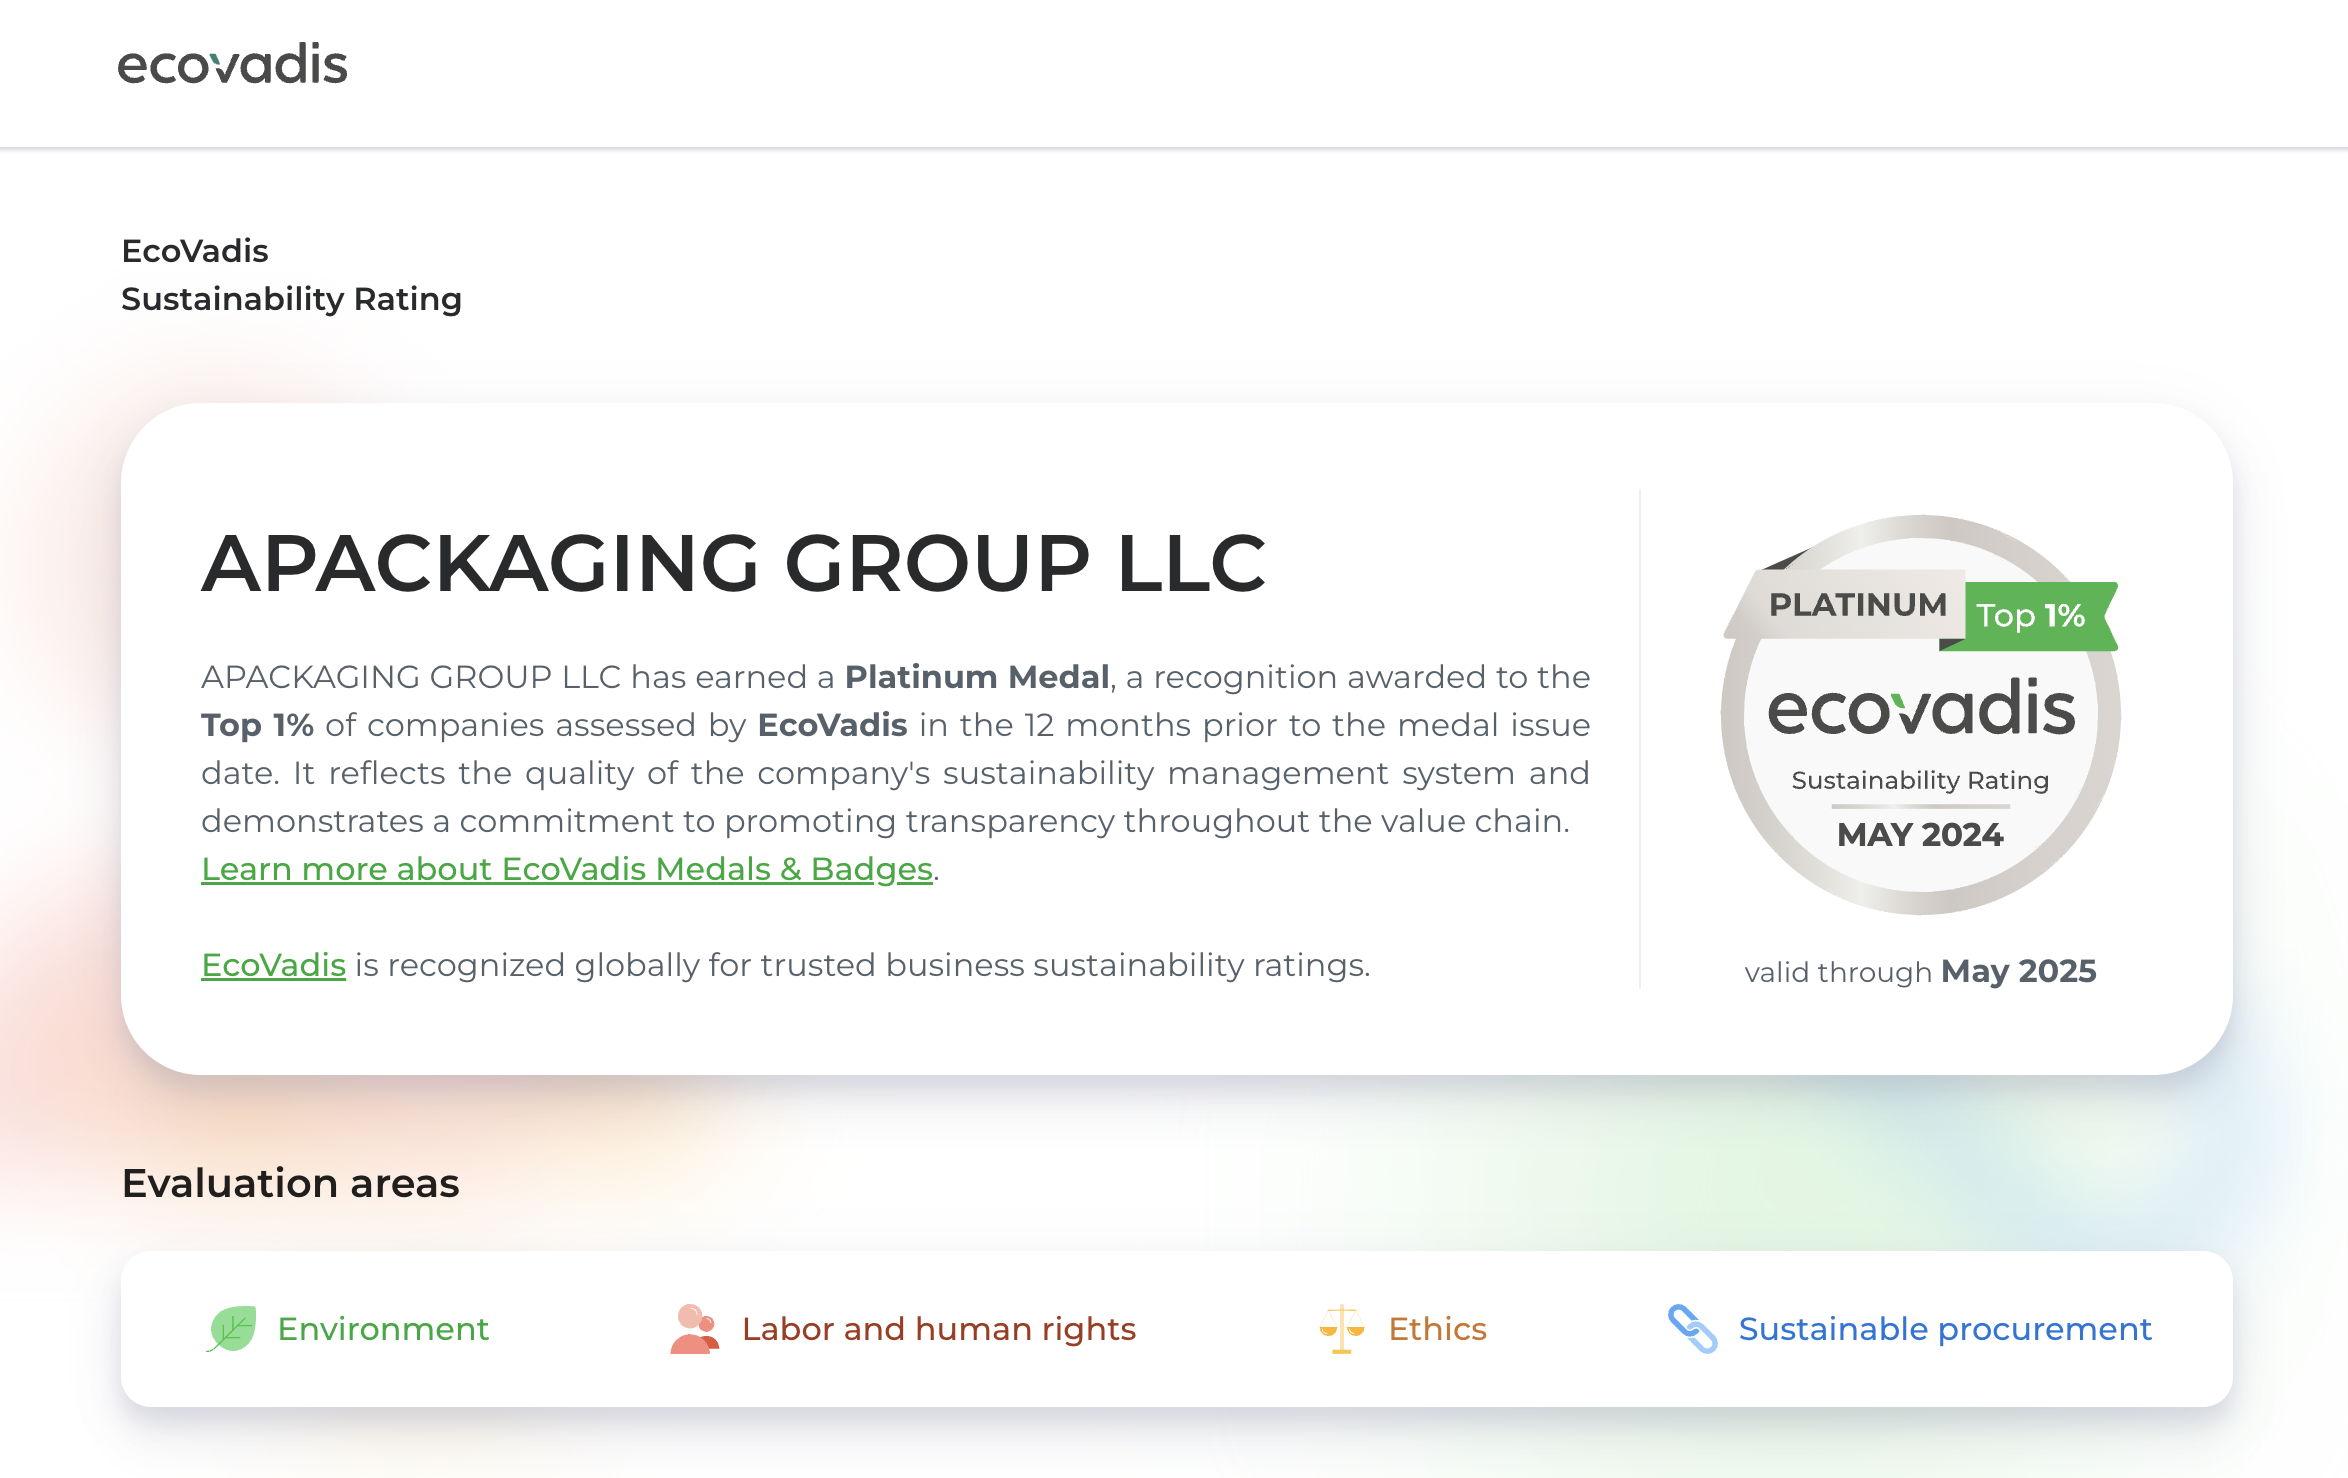 EcoVadis Platinum Sustainability Rating - Top 1%